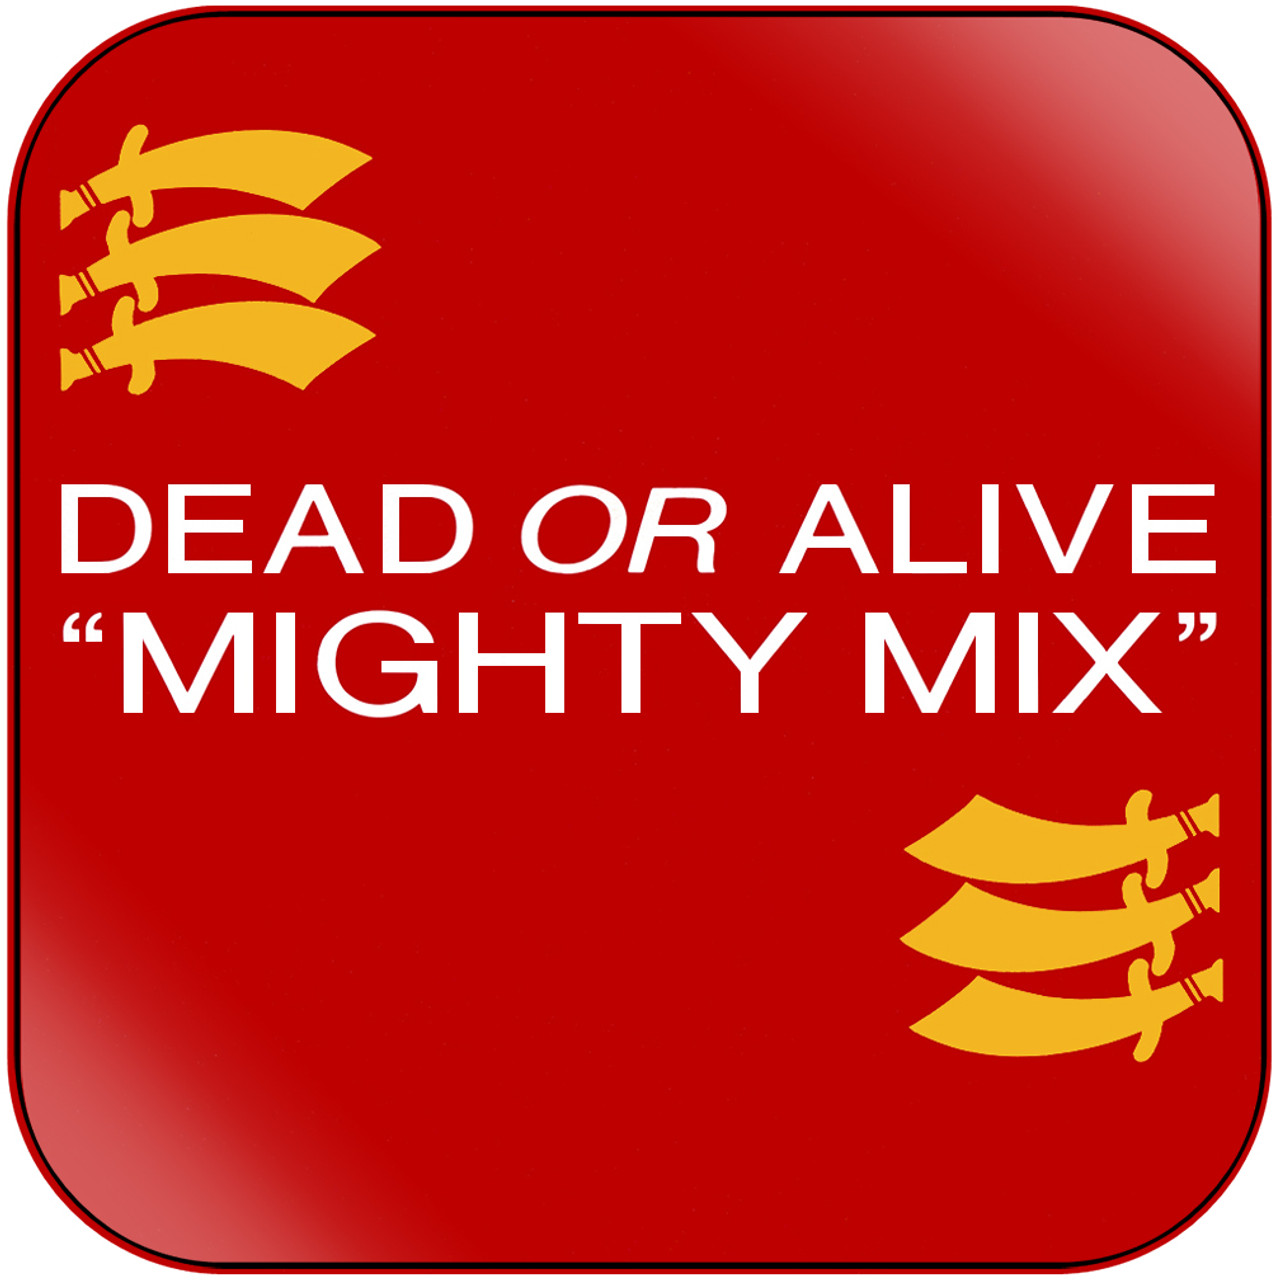 Dead or Alive Mighty Mix Album Cover Sticker